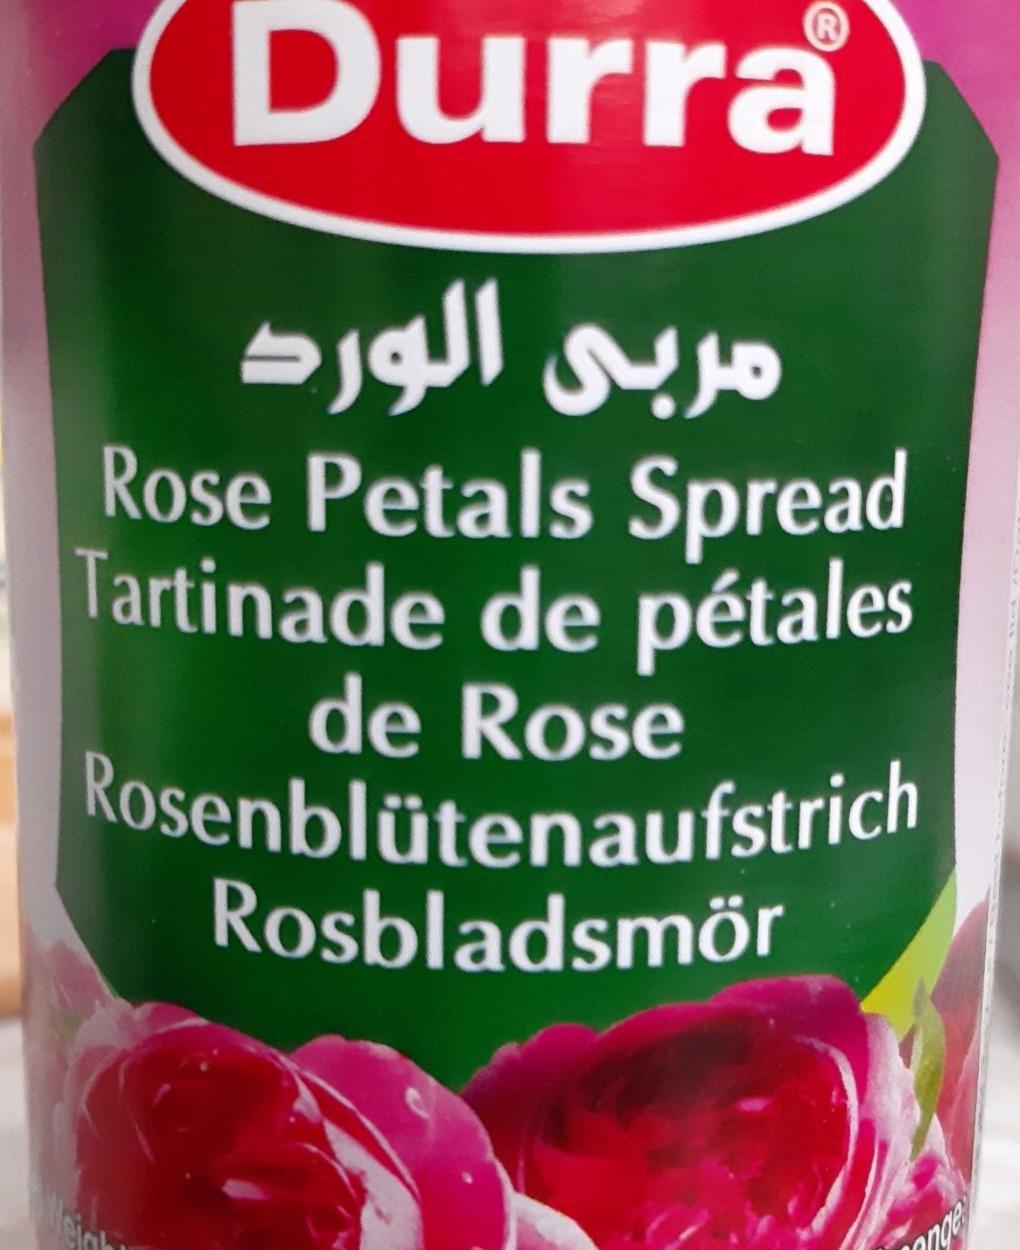 Fotografie - Rose petals spread Durra